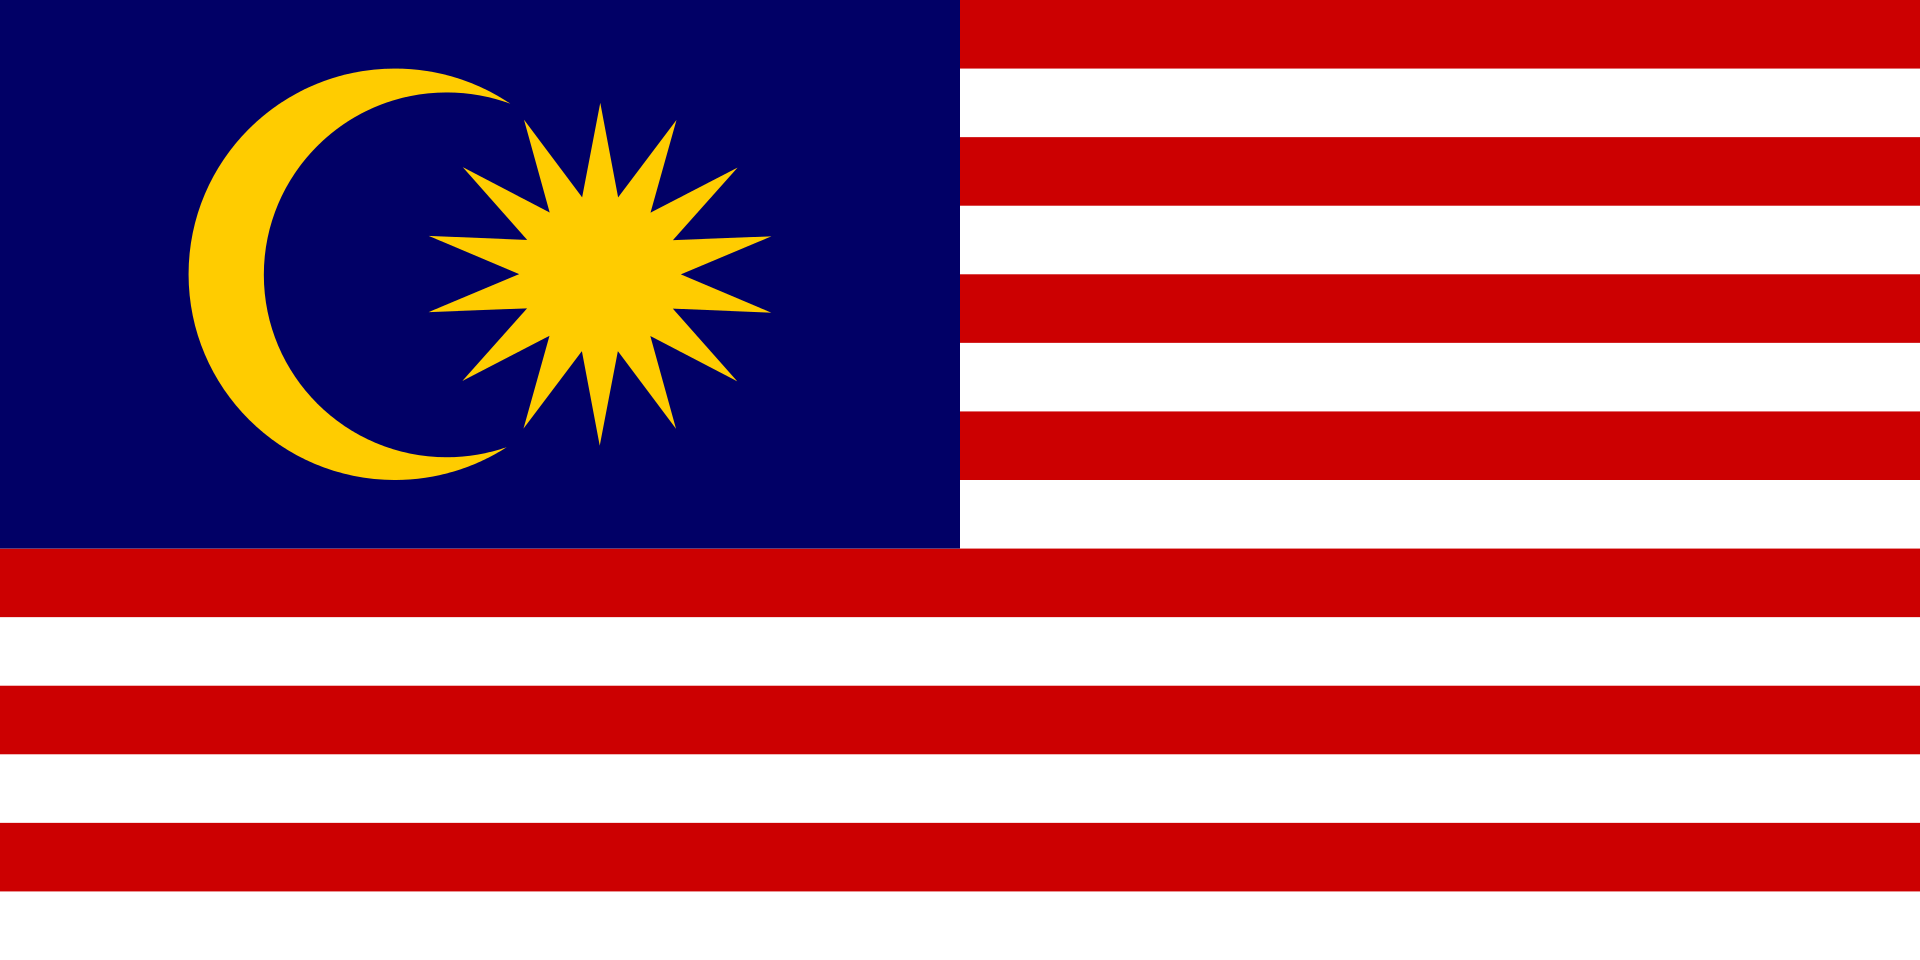 Malaysia: Sodomy, Religion And Courage